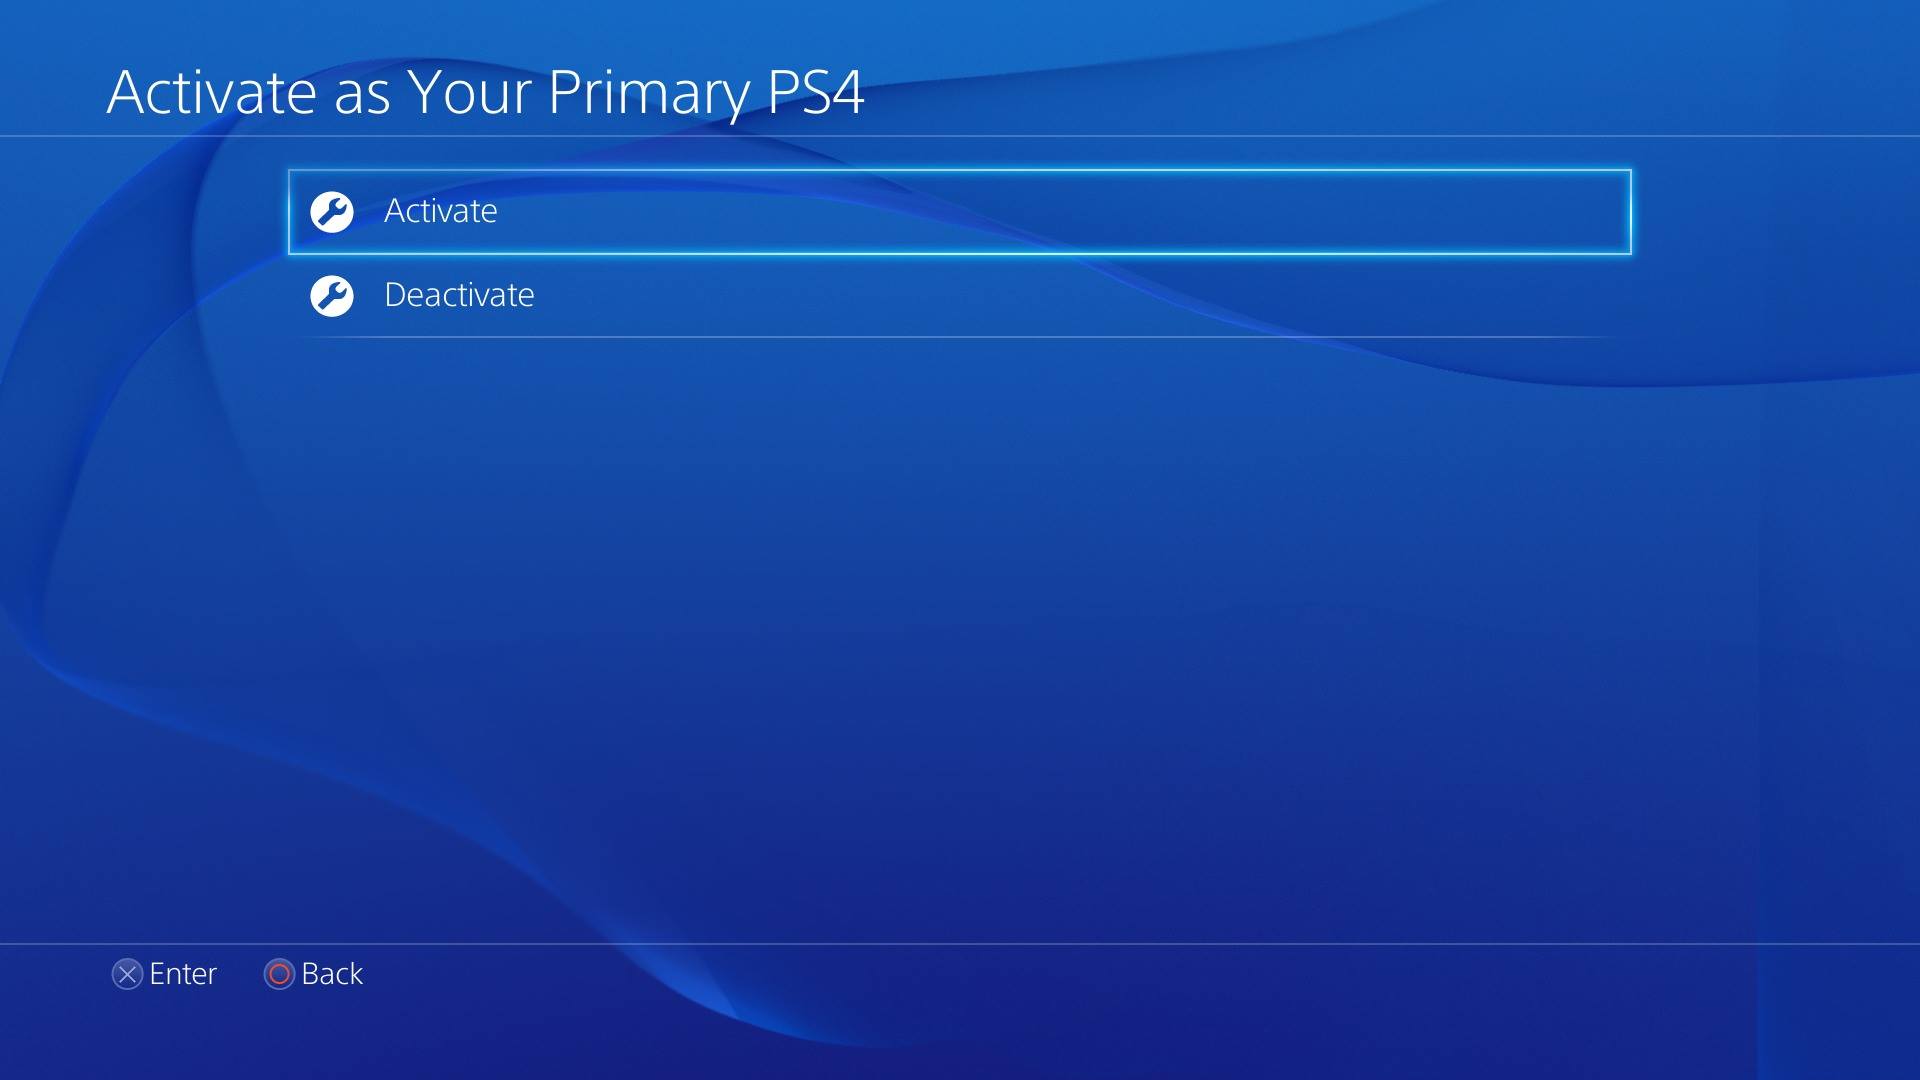 More PlayStation 4 settings